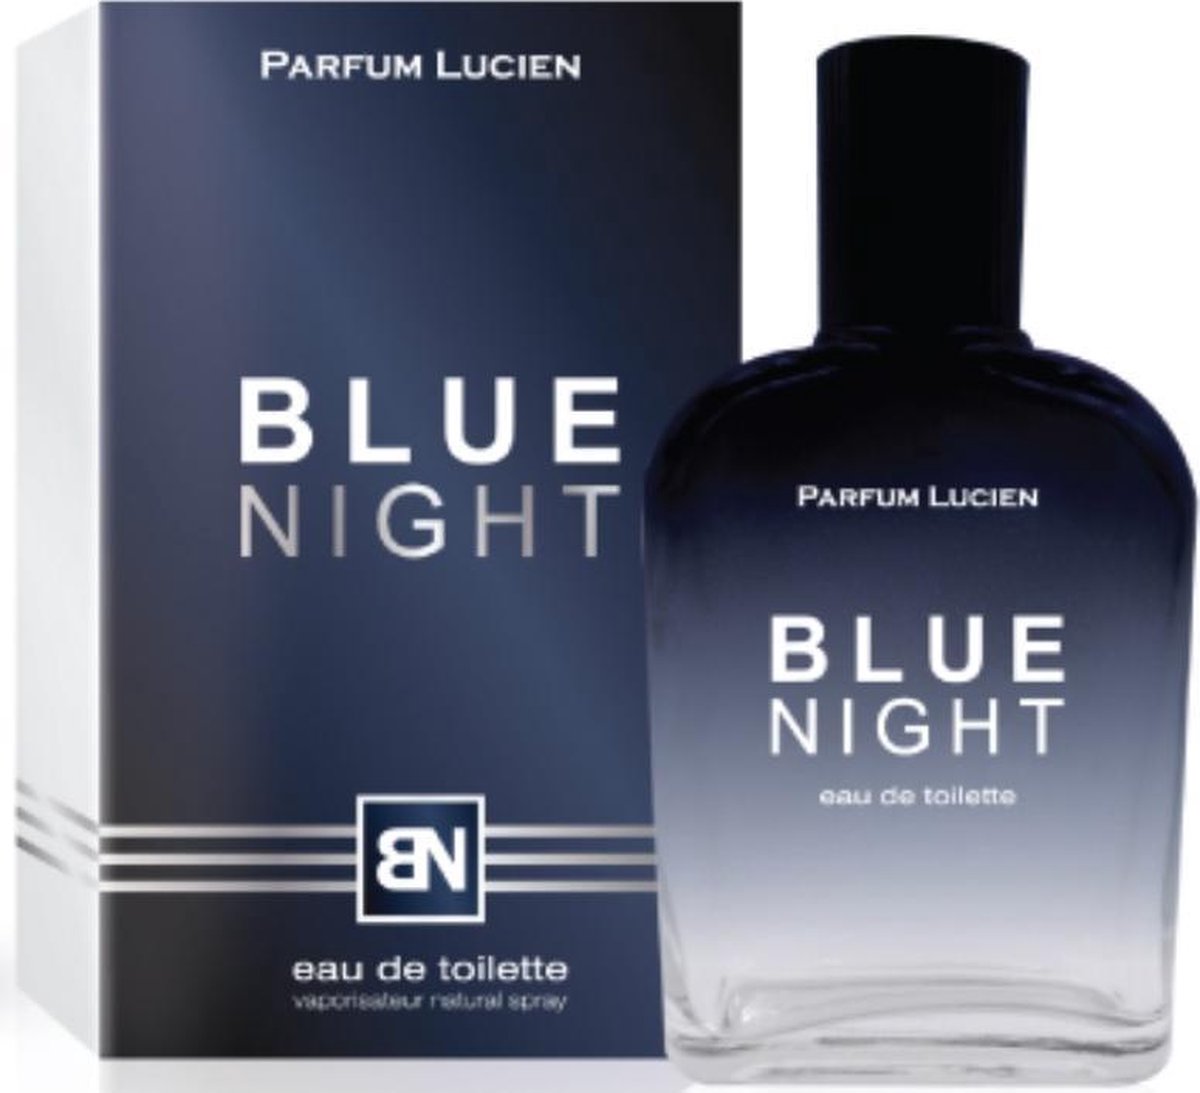 Parfum Lucien Blue Night